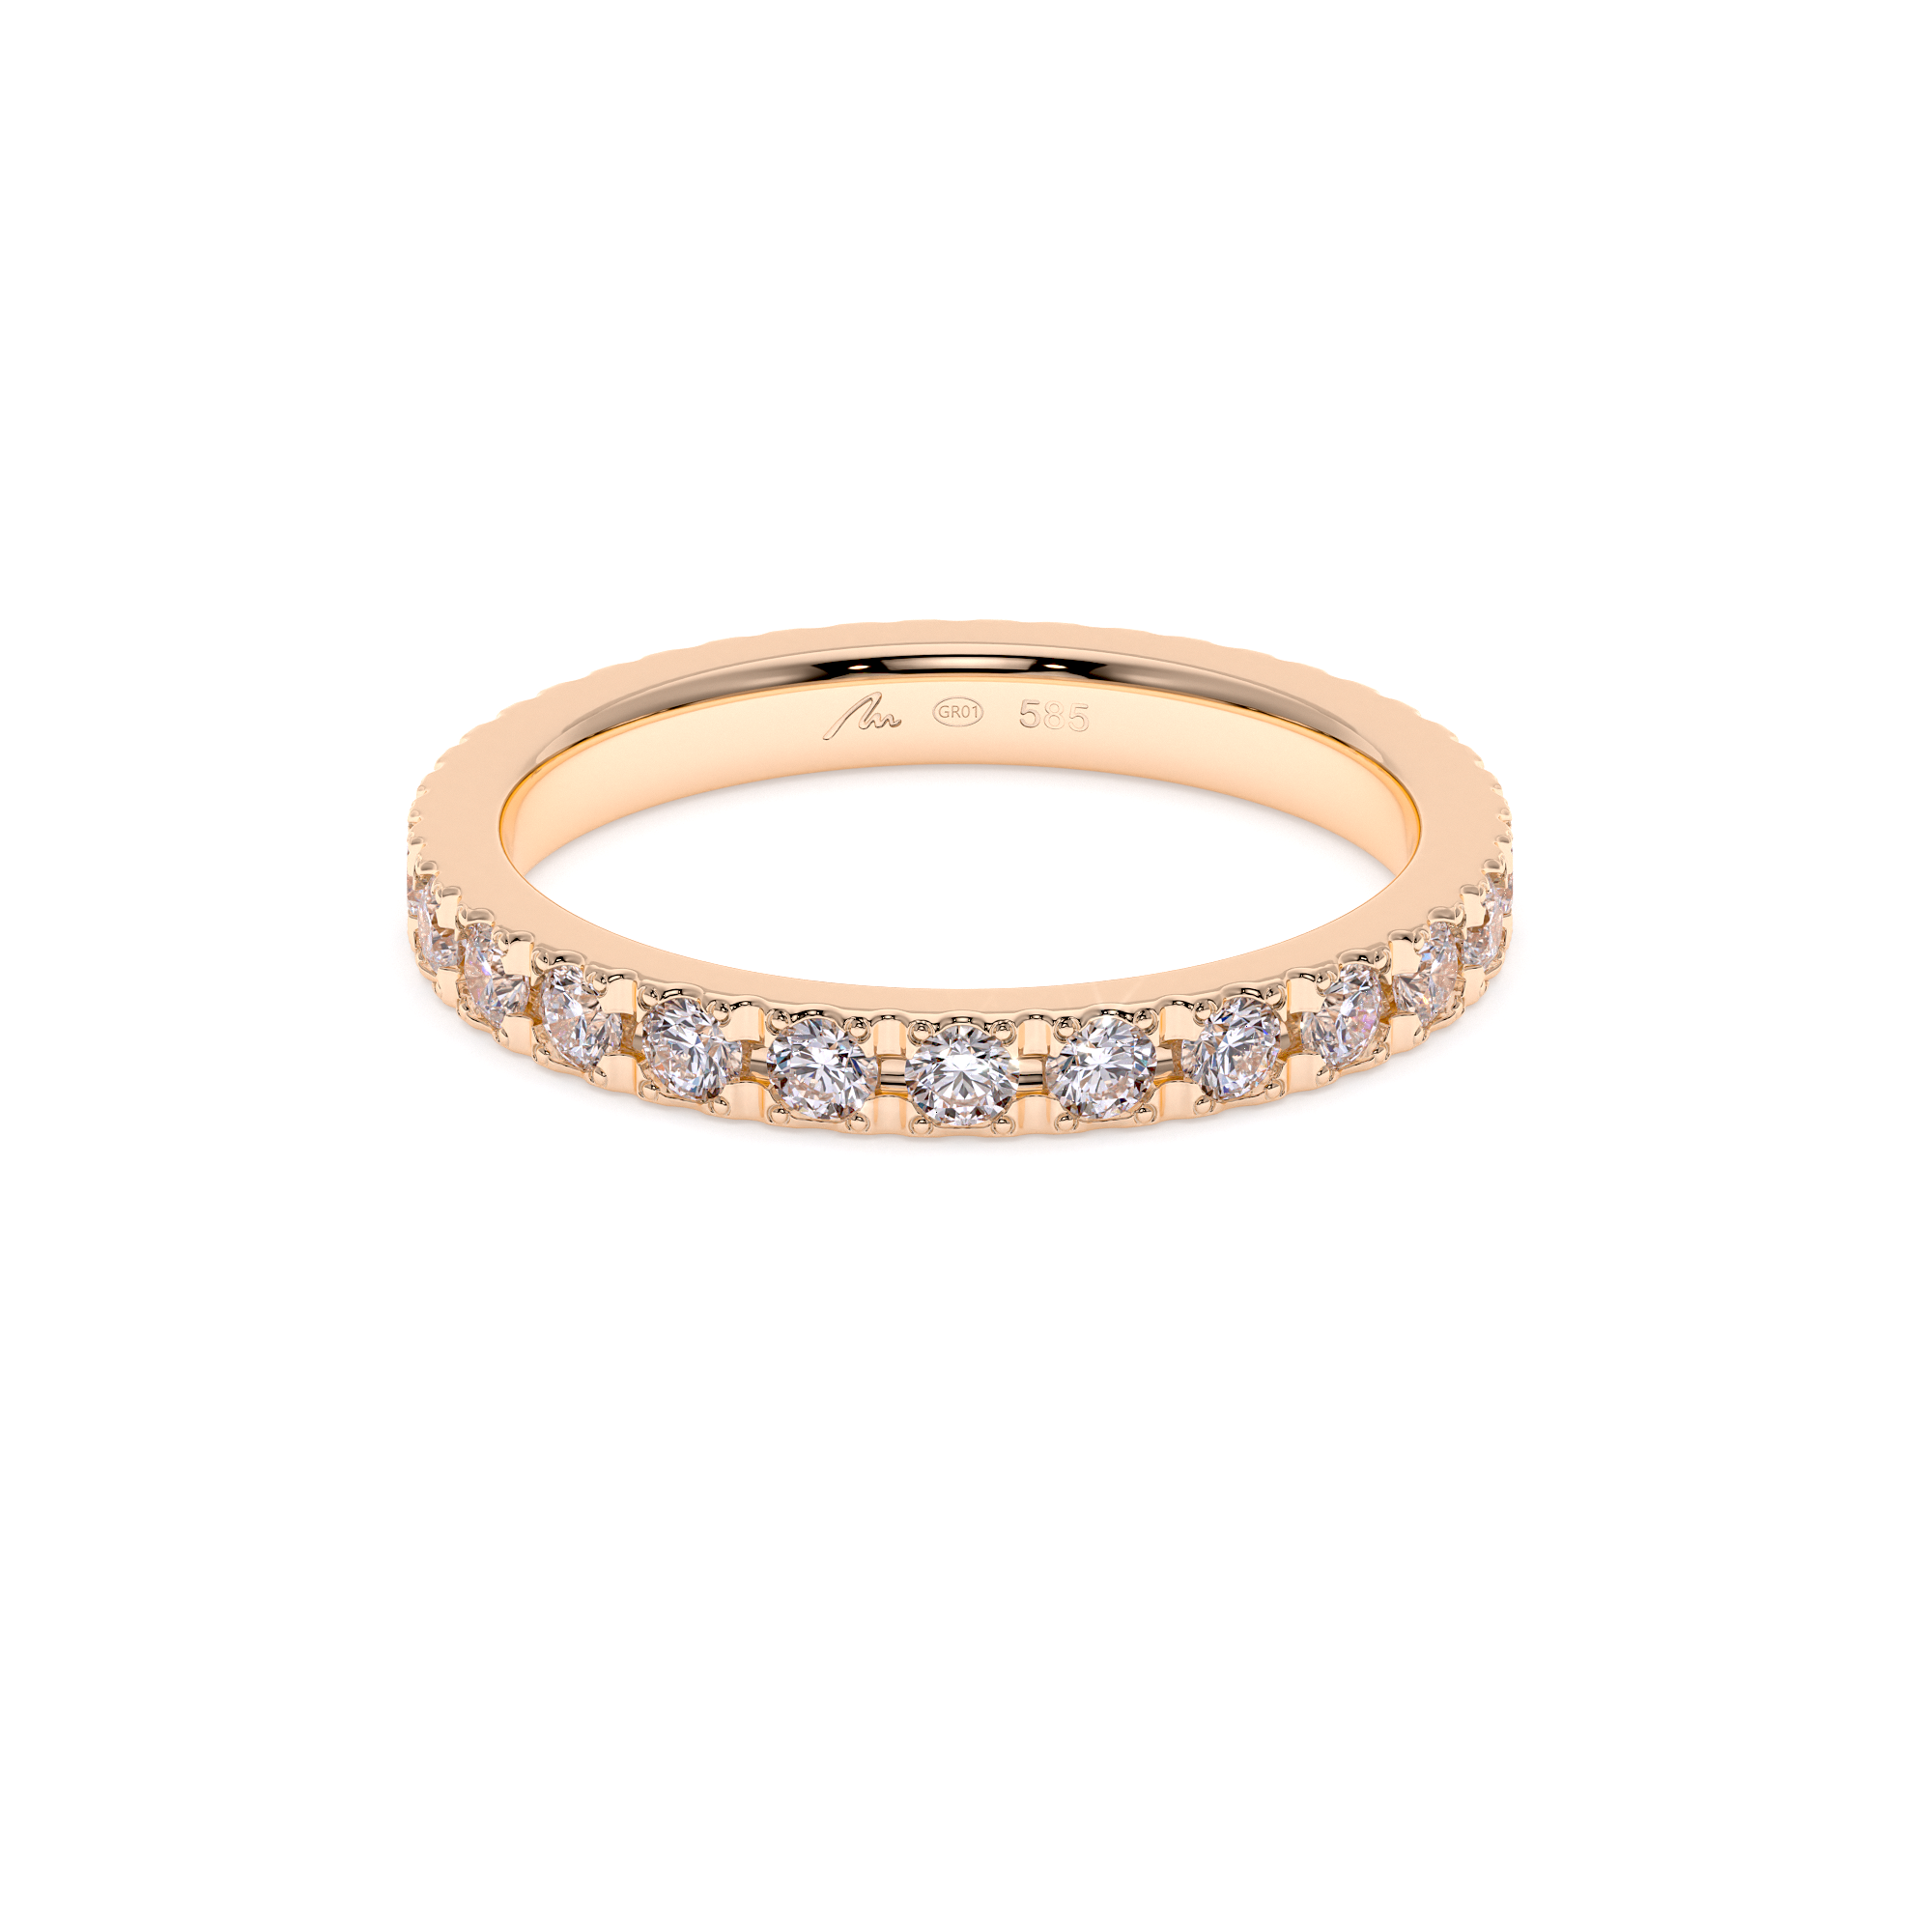 14 k rose gold Tennis ring with 0.84 CT white diamonds